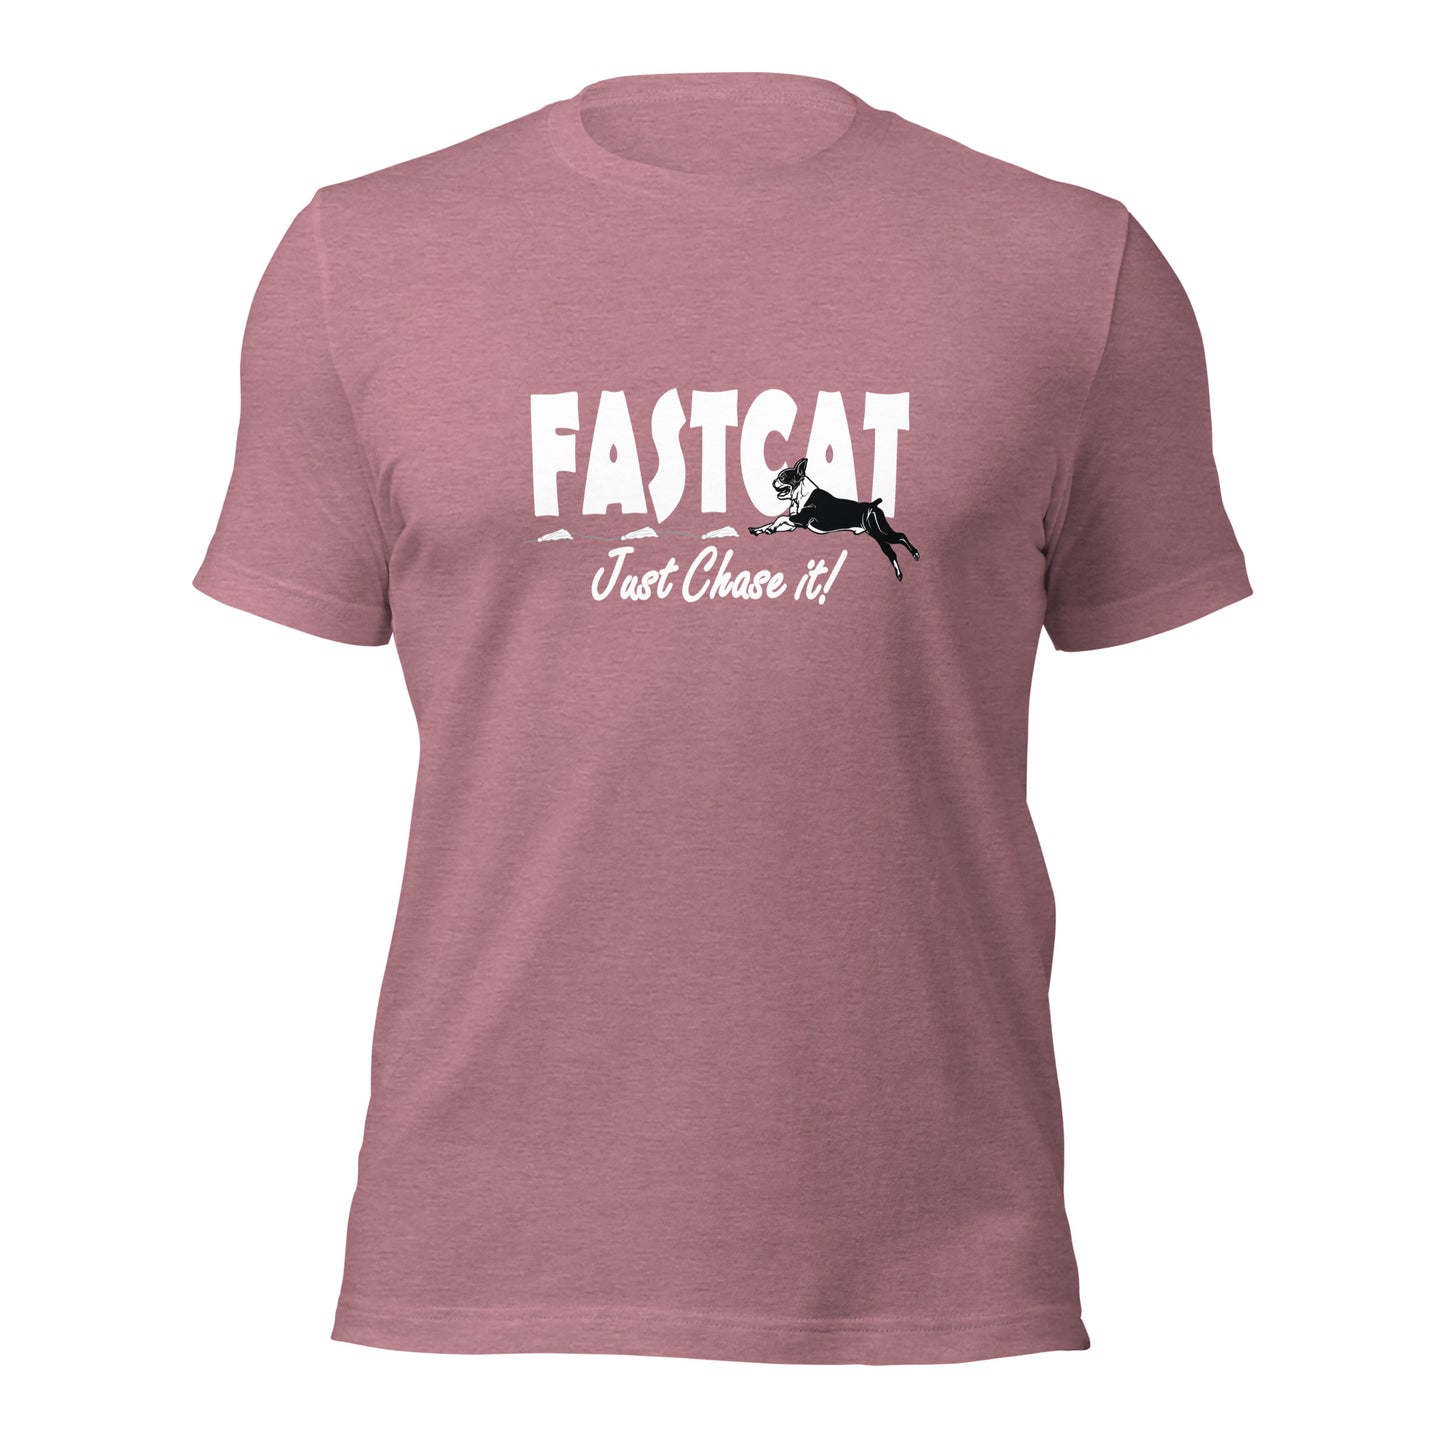 BOSTON - FASTCAT - Unisex t-shirt